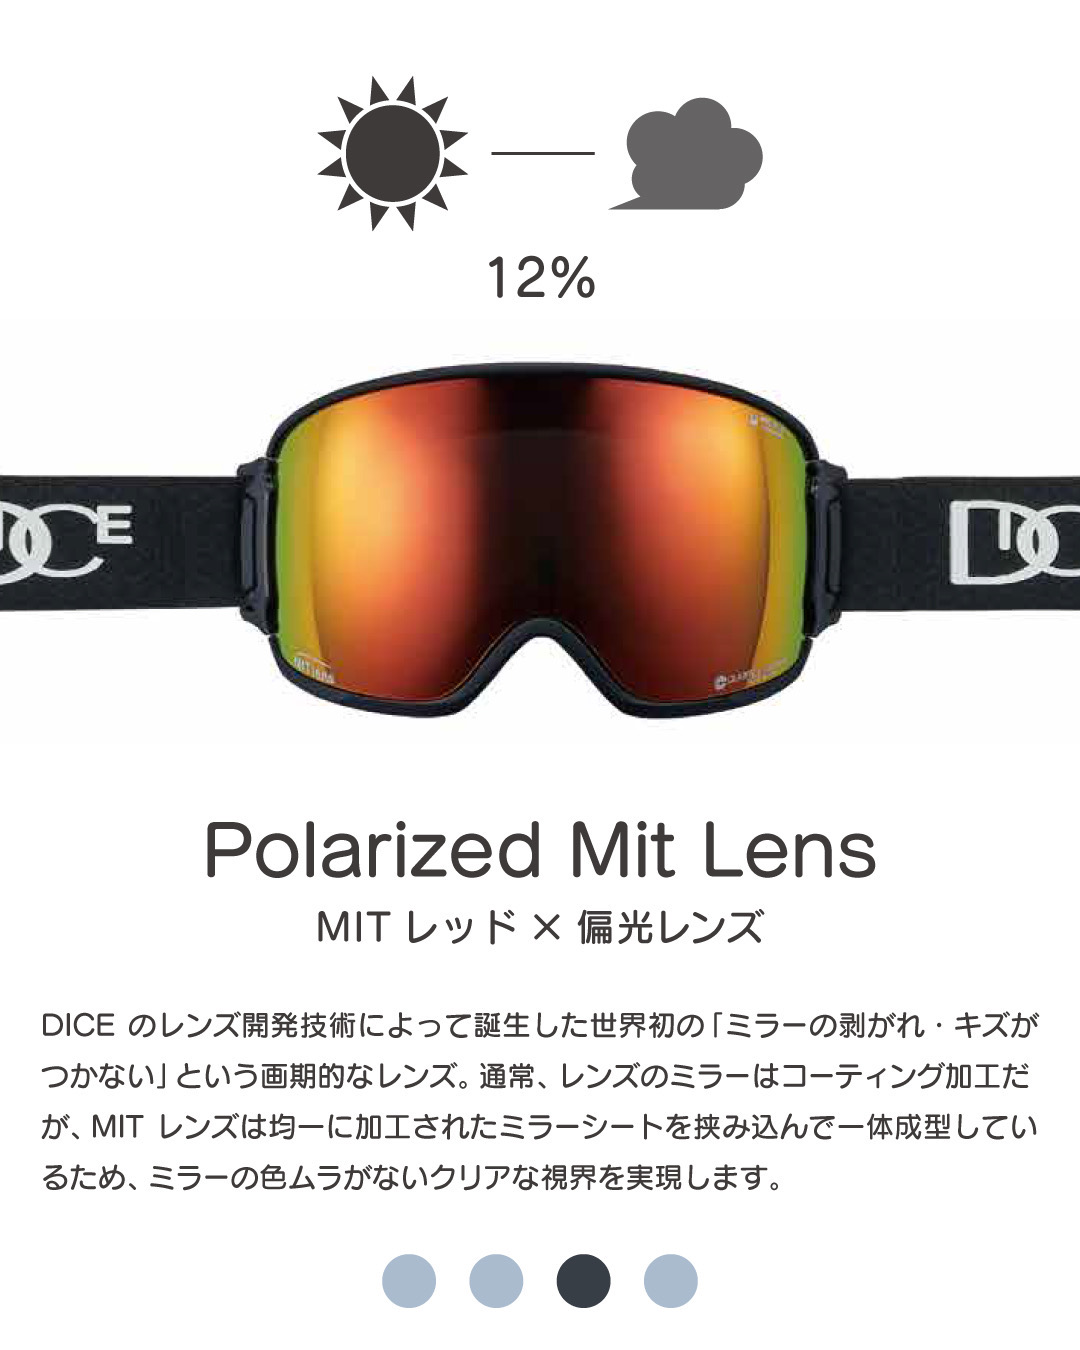 DICE snowboarding goggles (公式) (@DiceGoggles) / X